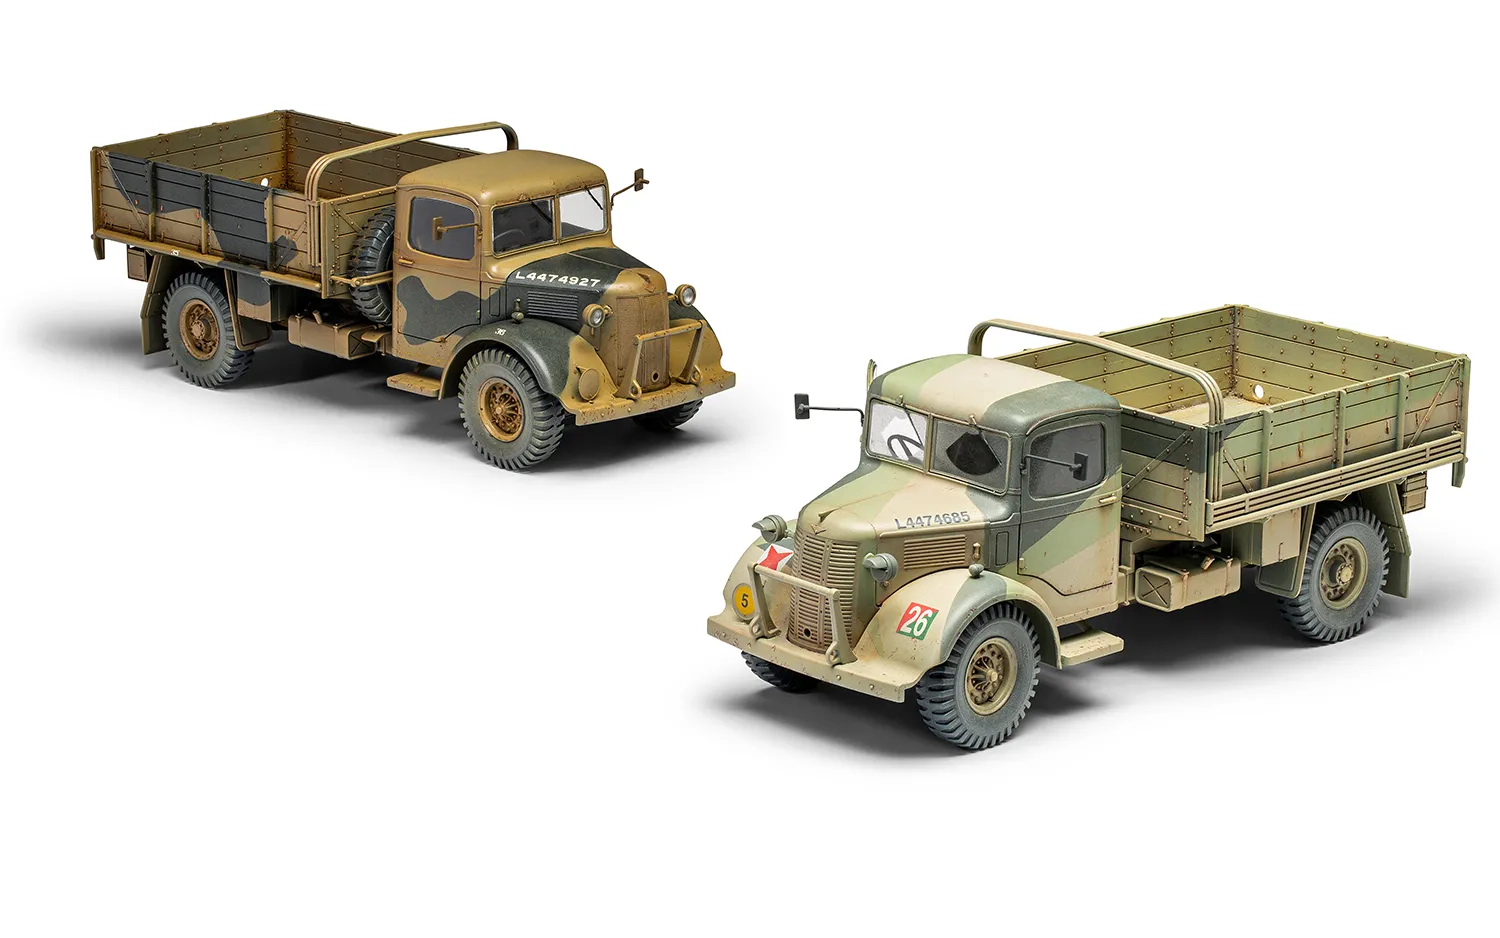 WWII British Army 30-cwt 4x2 GS Truck